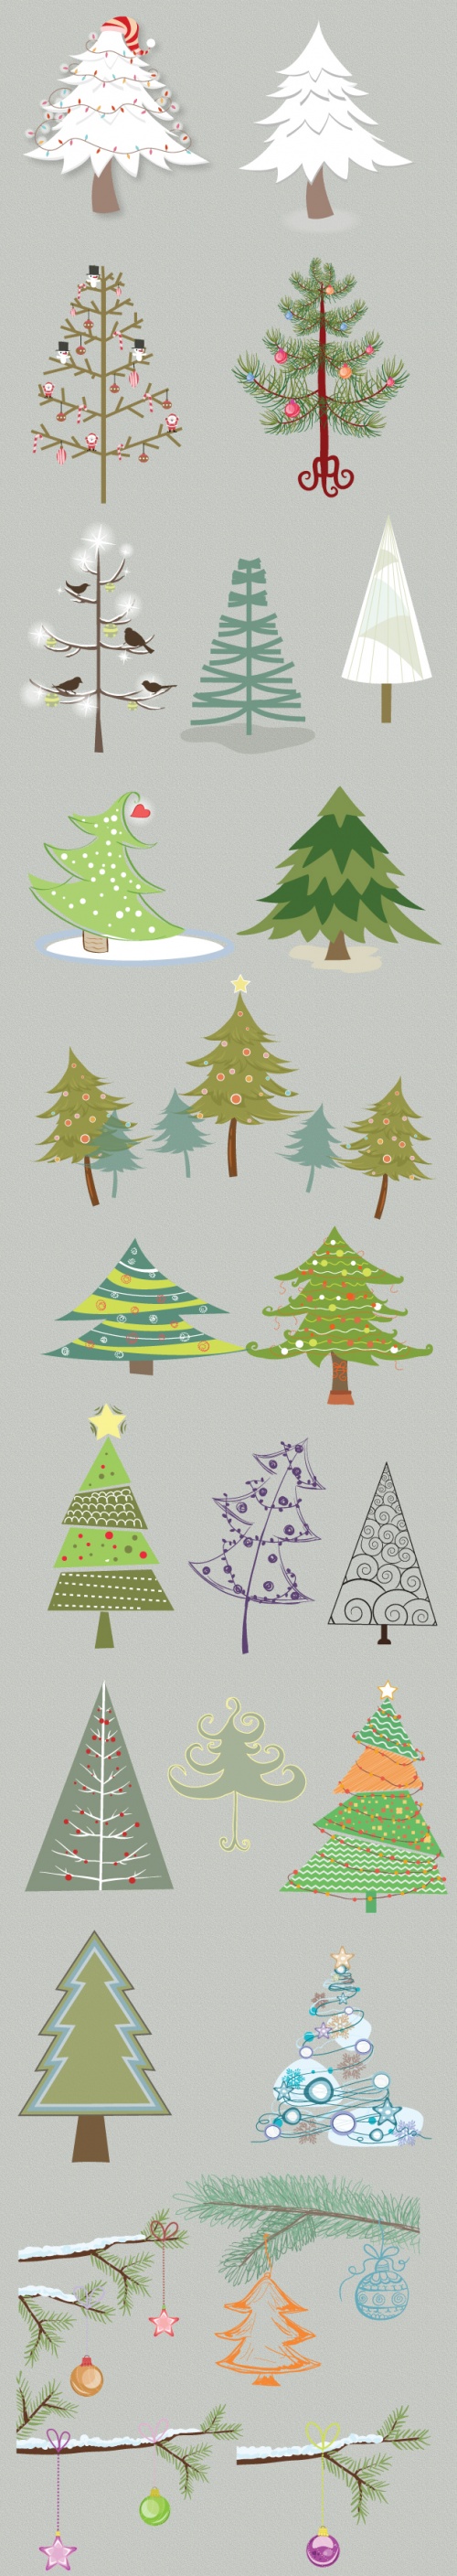 Designtnt - Christmas Trees Vector Set 1